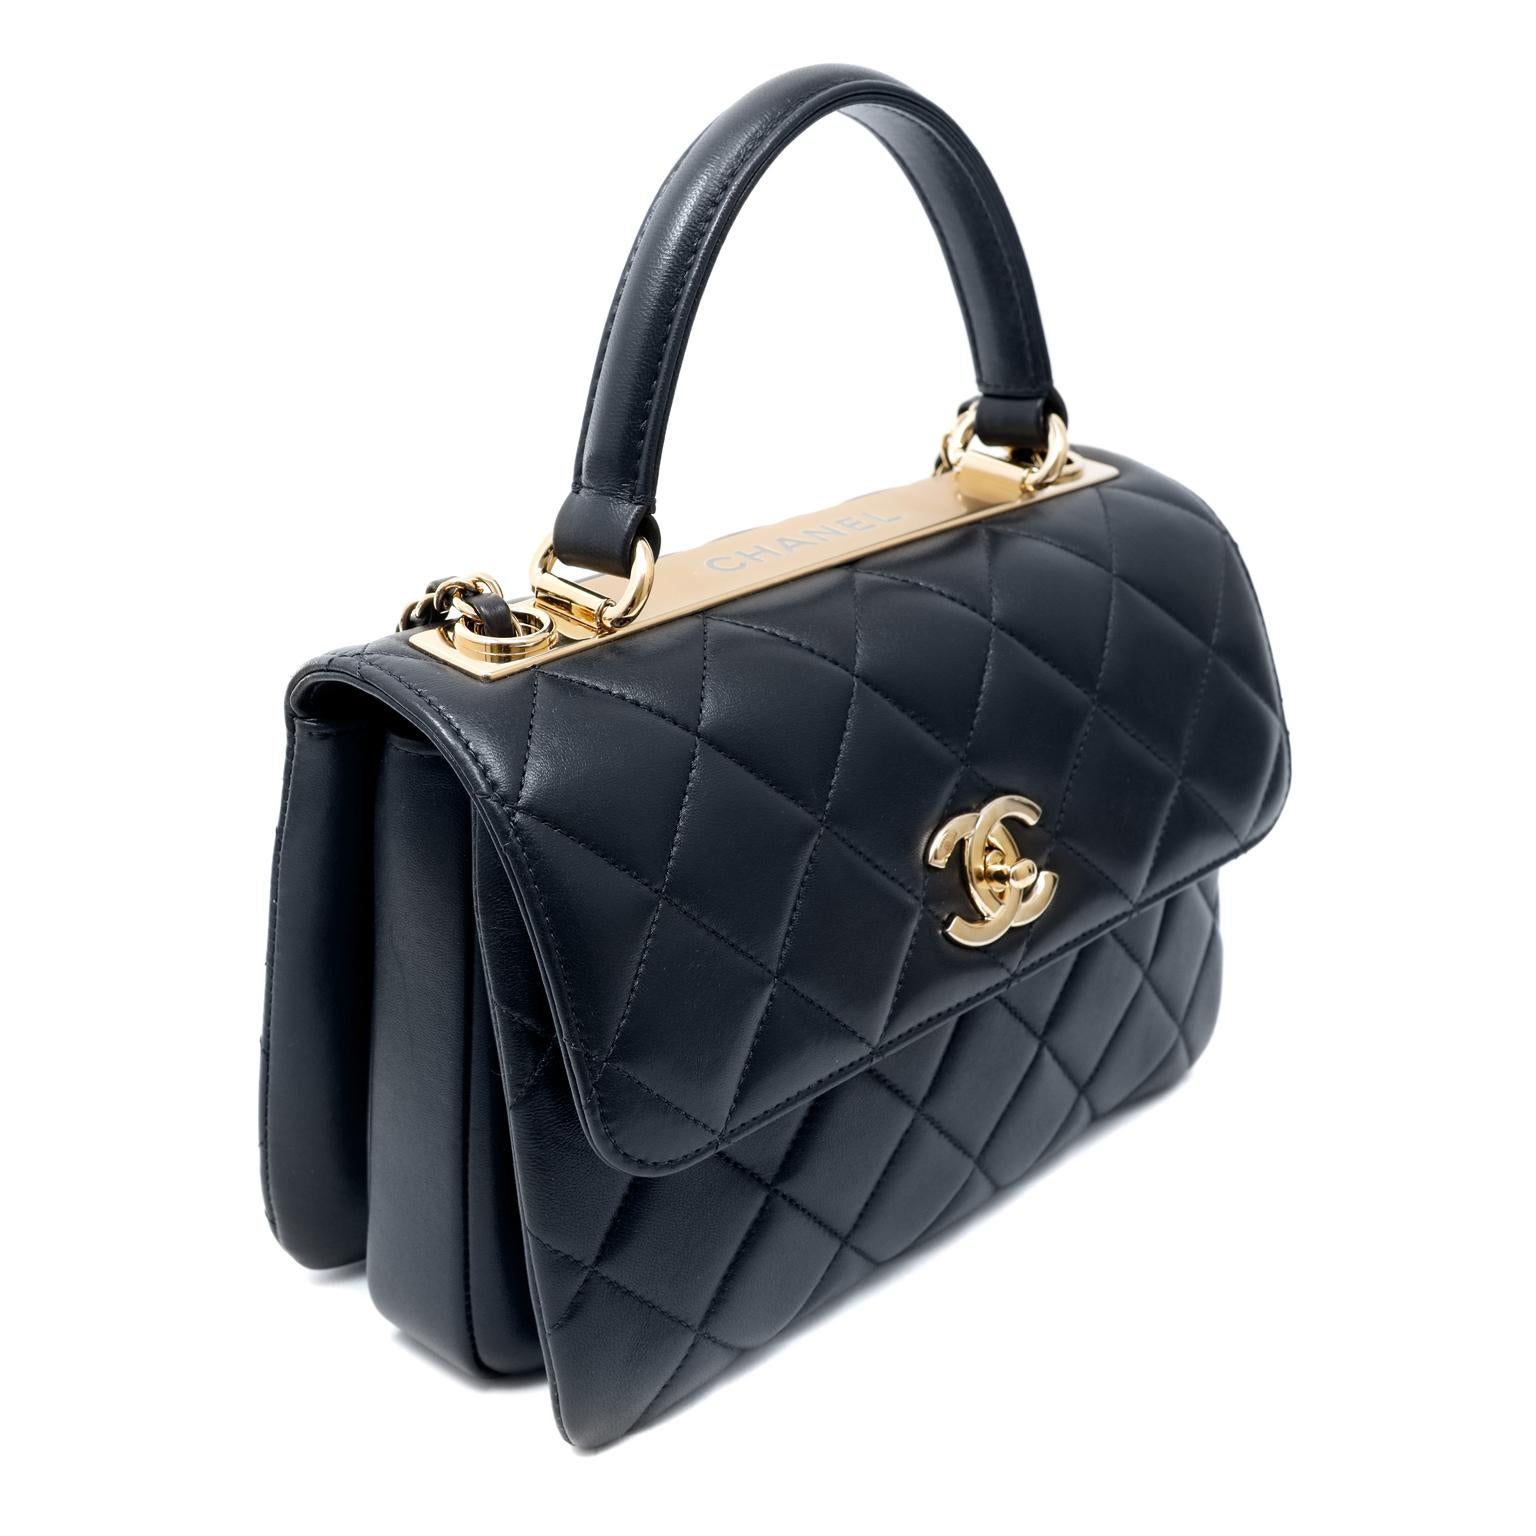 Black Chanel Navy Leather Top Handle Bag